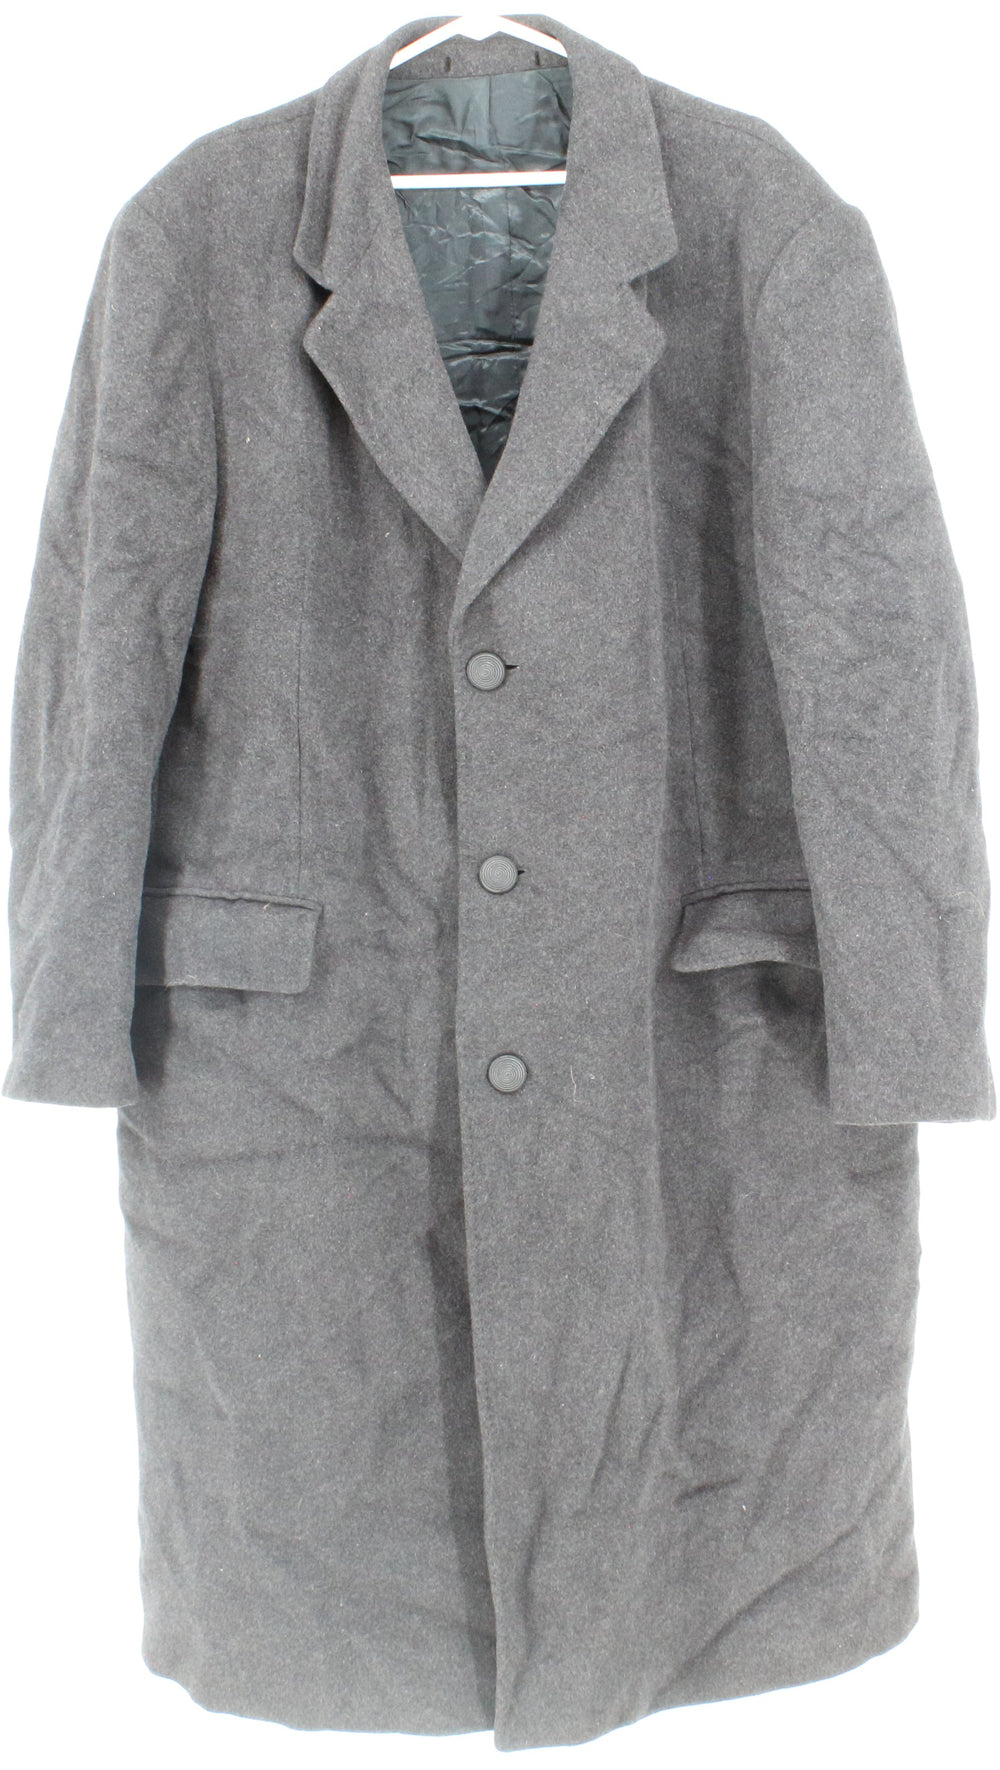 Andrew Milan Collection Dark Grey Long Coat